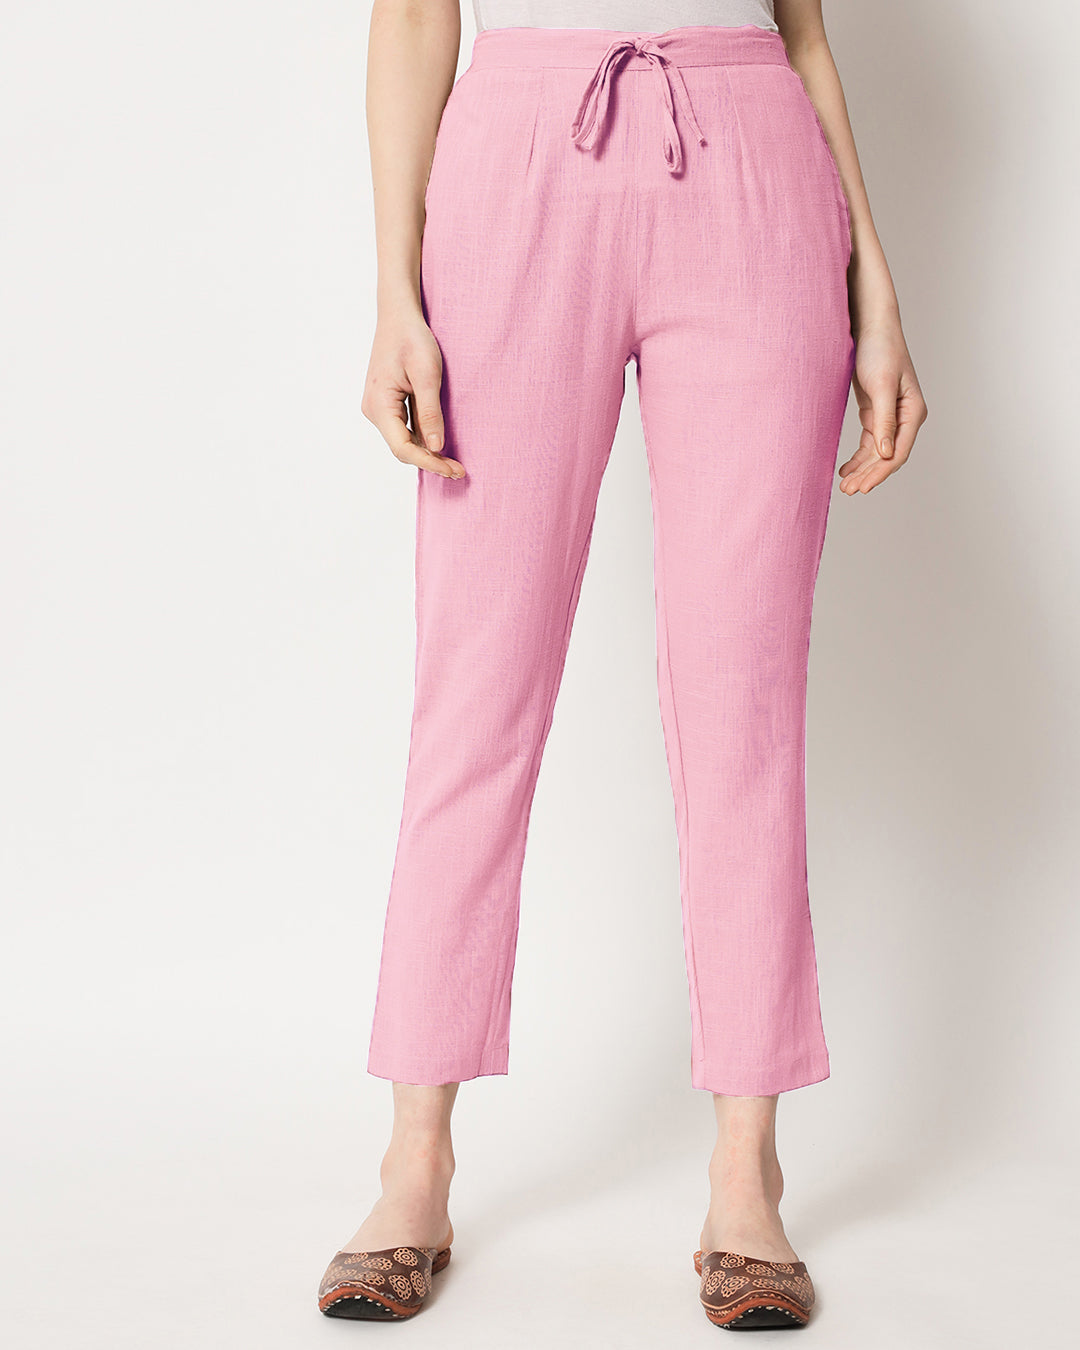 Combo: White & Pink Mist Cigarette Pants- Set of 2